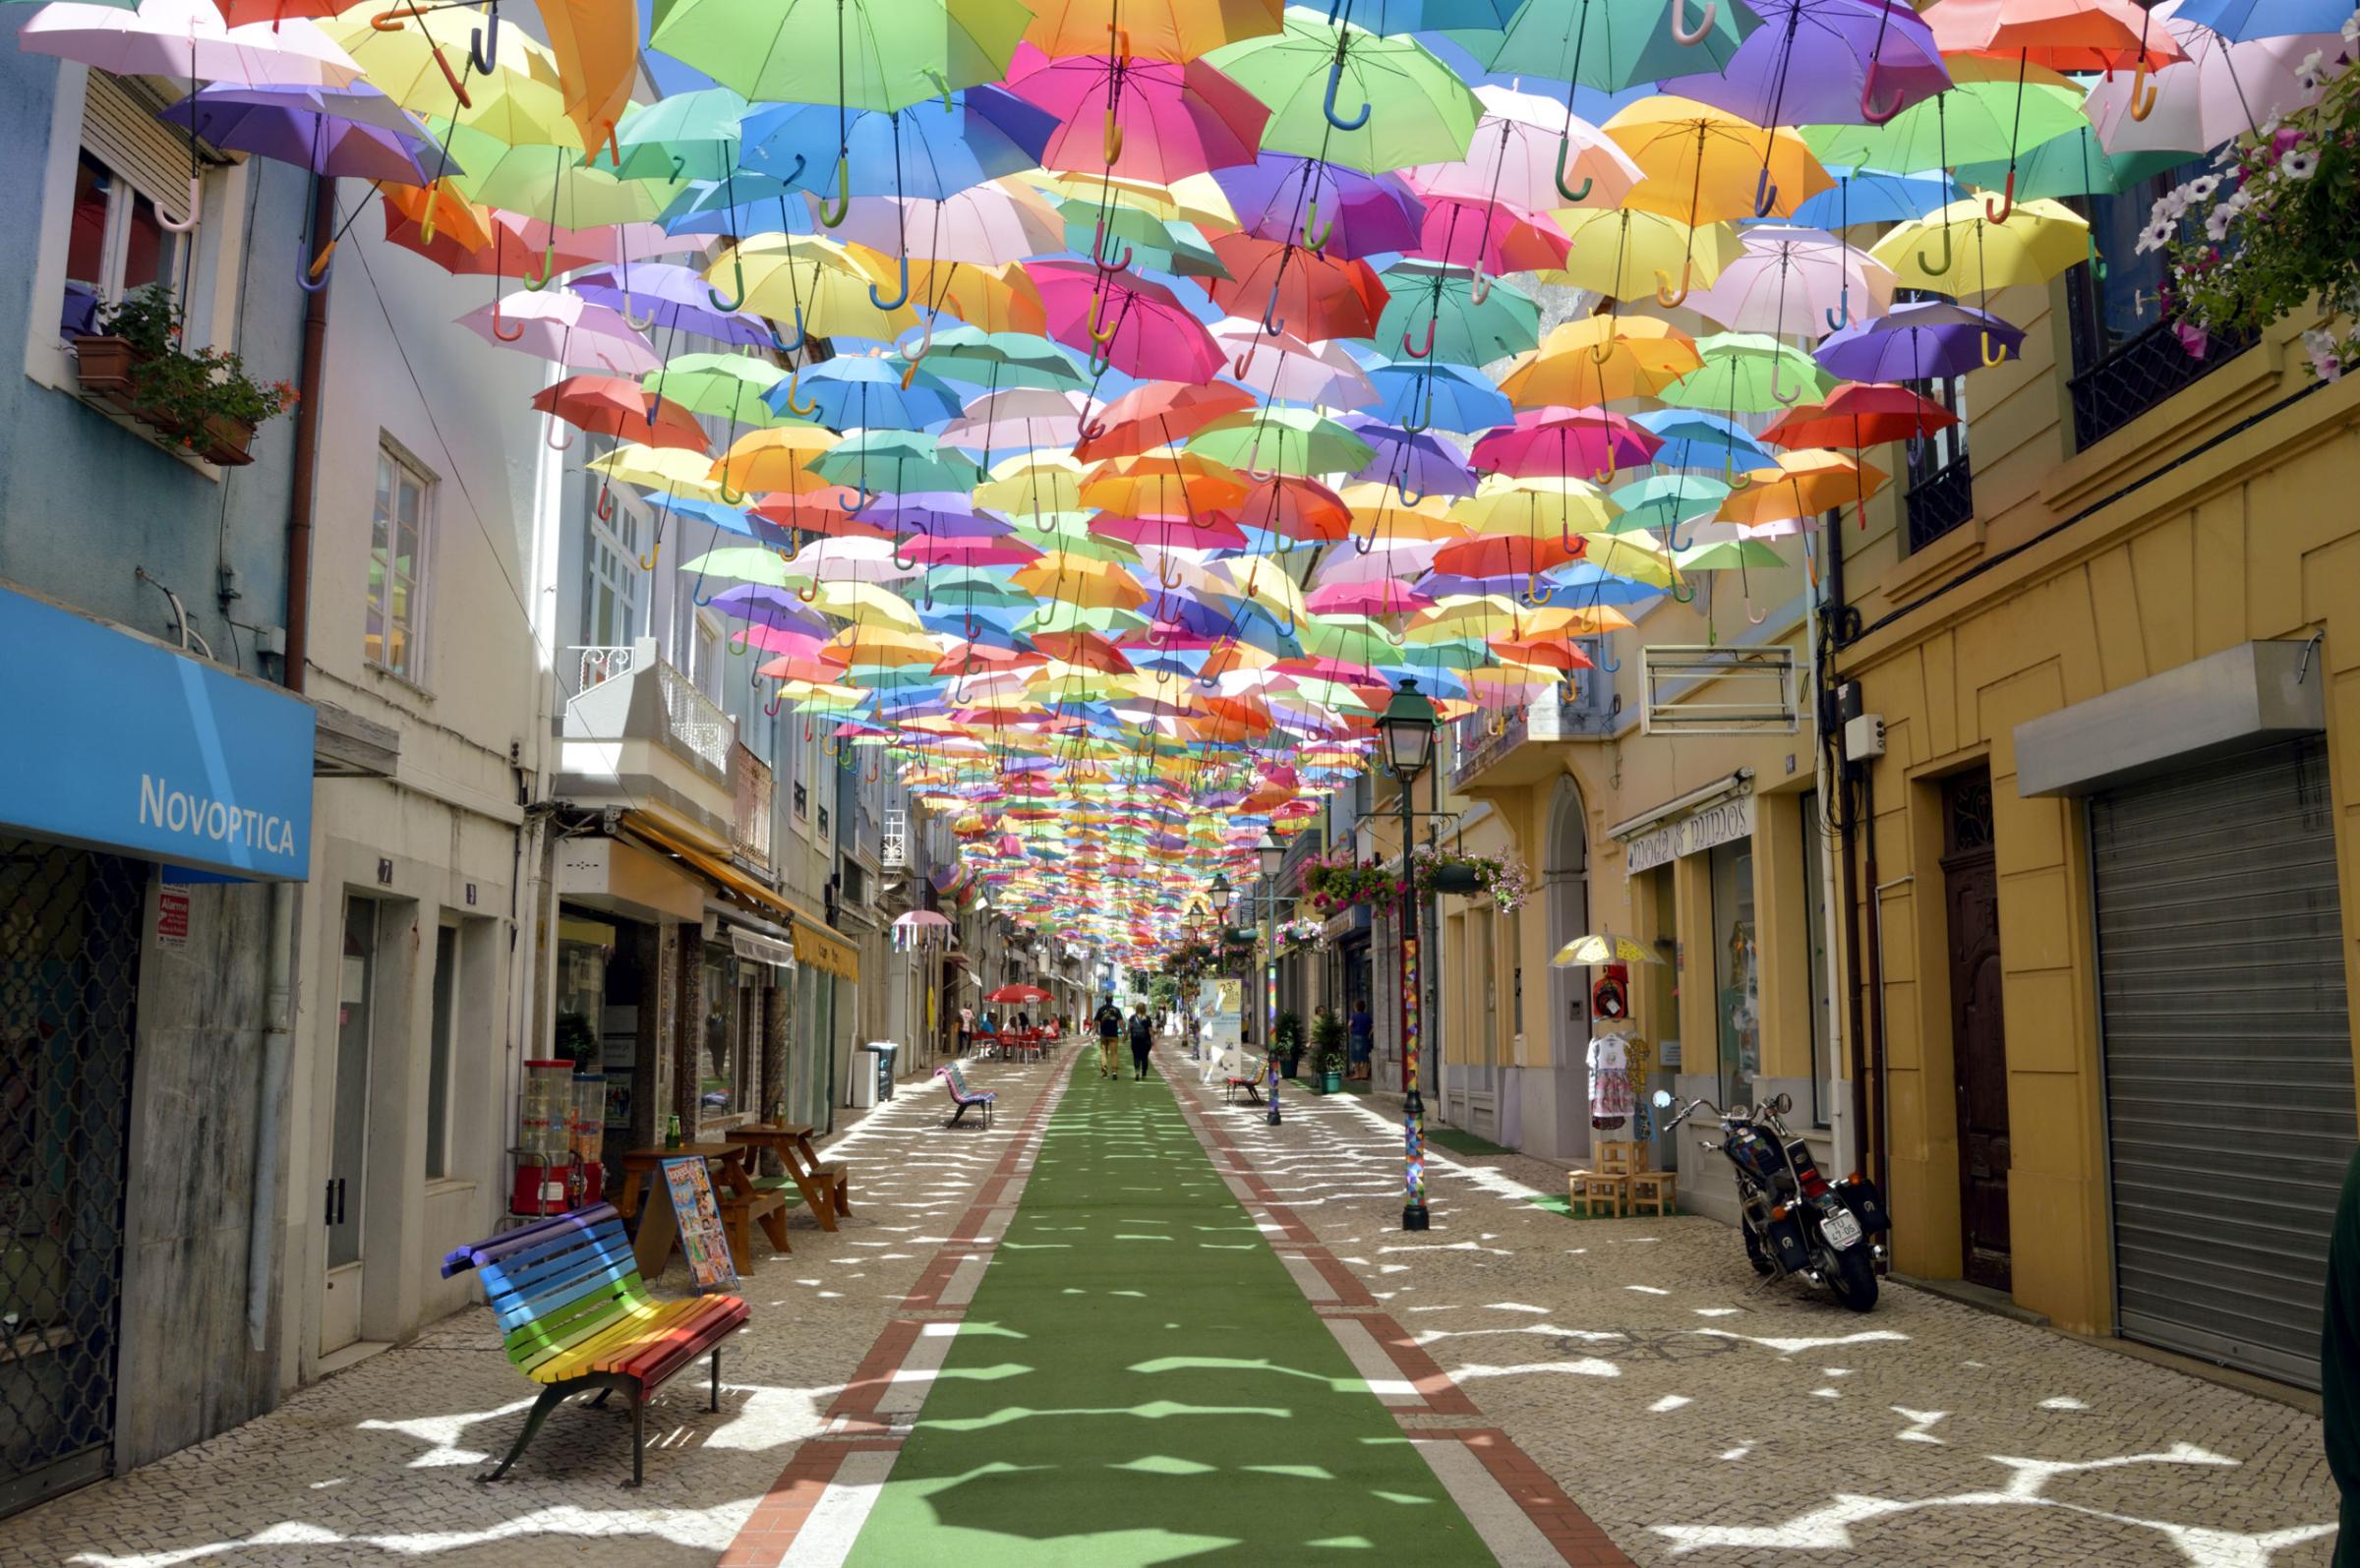 Umbrella Sky Project in Águeda / Portugal 2016